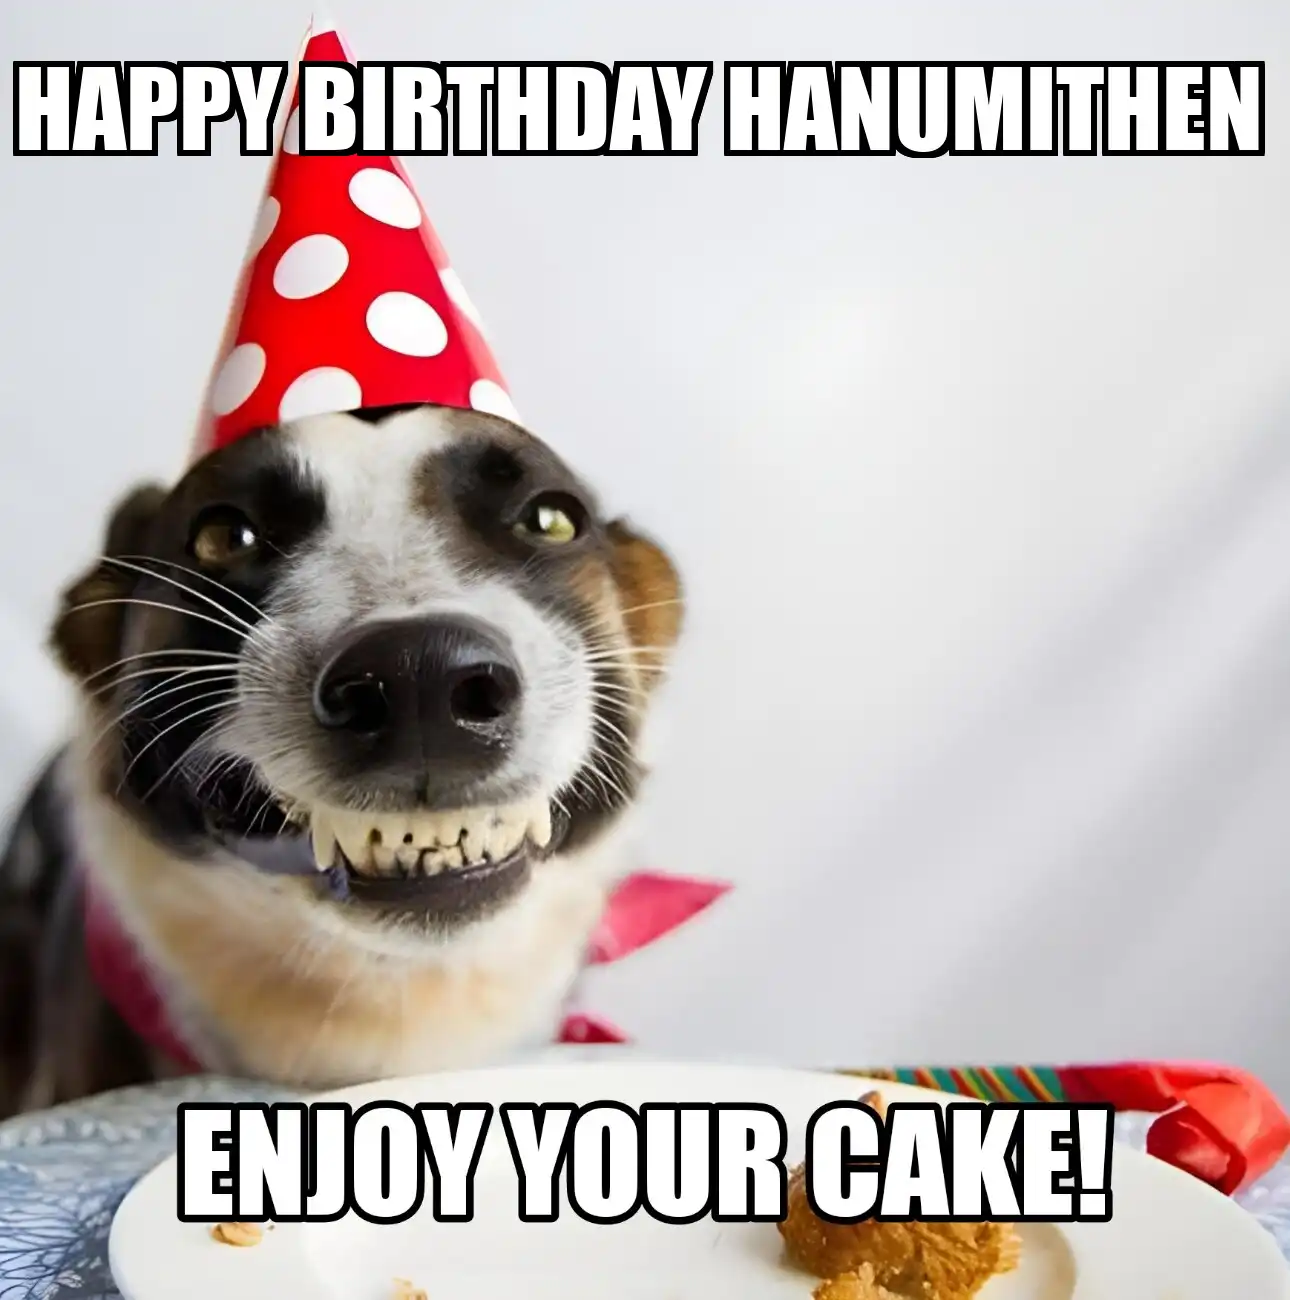 Happy Birthday Hanumithen Enjoy Your Cake Dog Meme